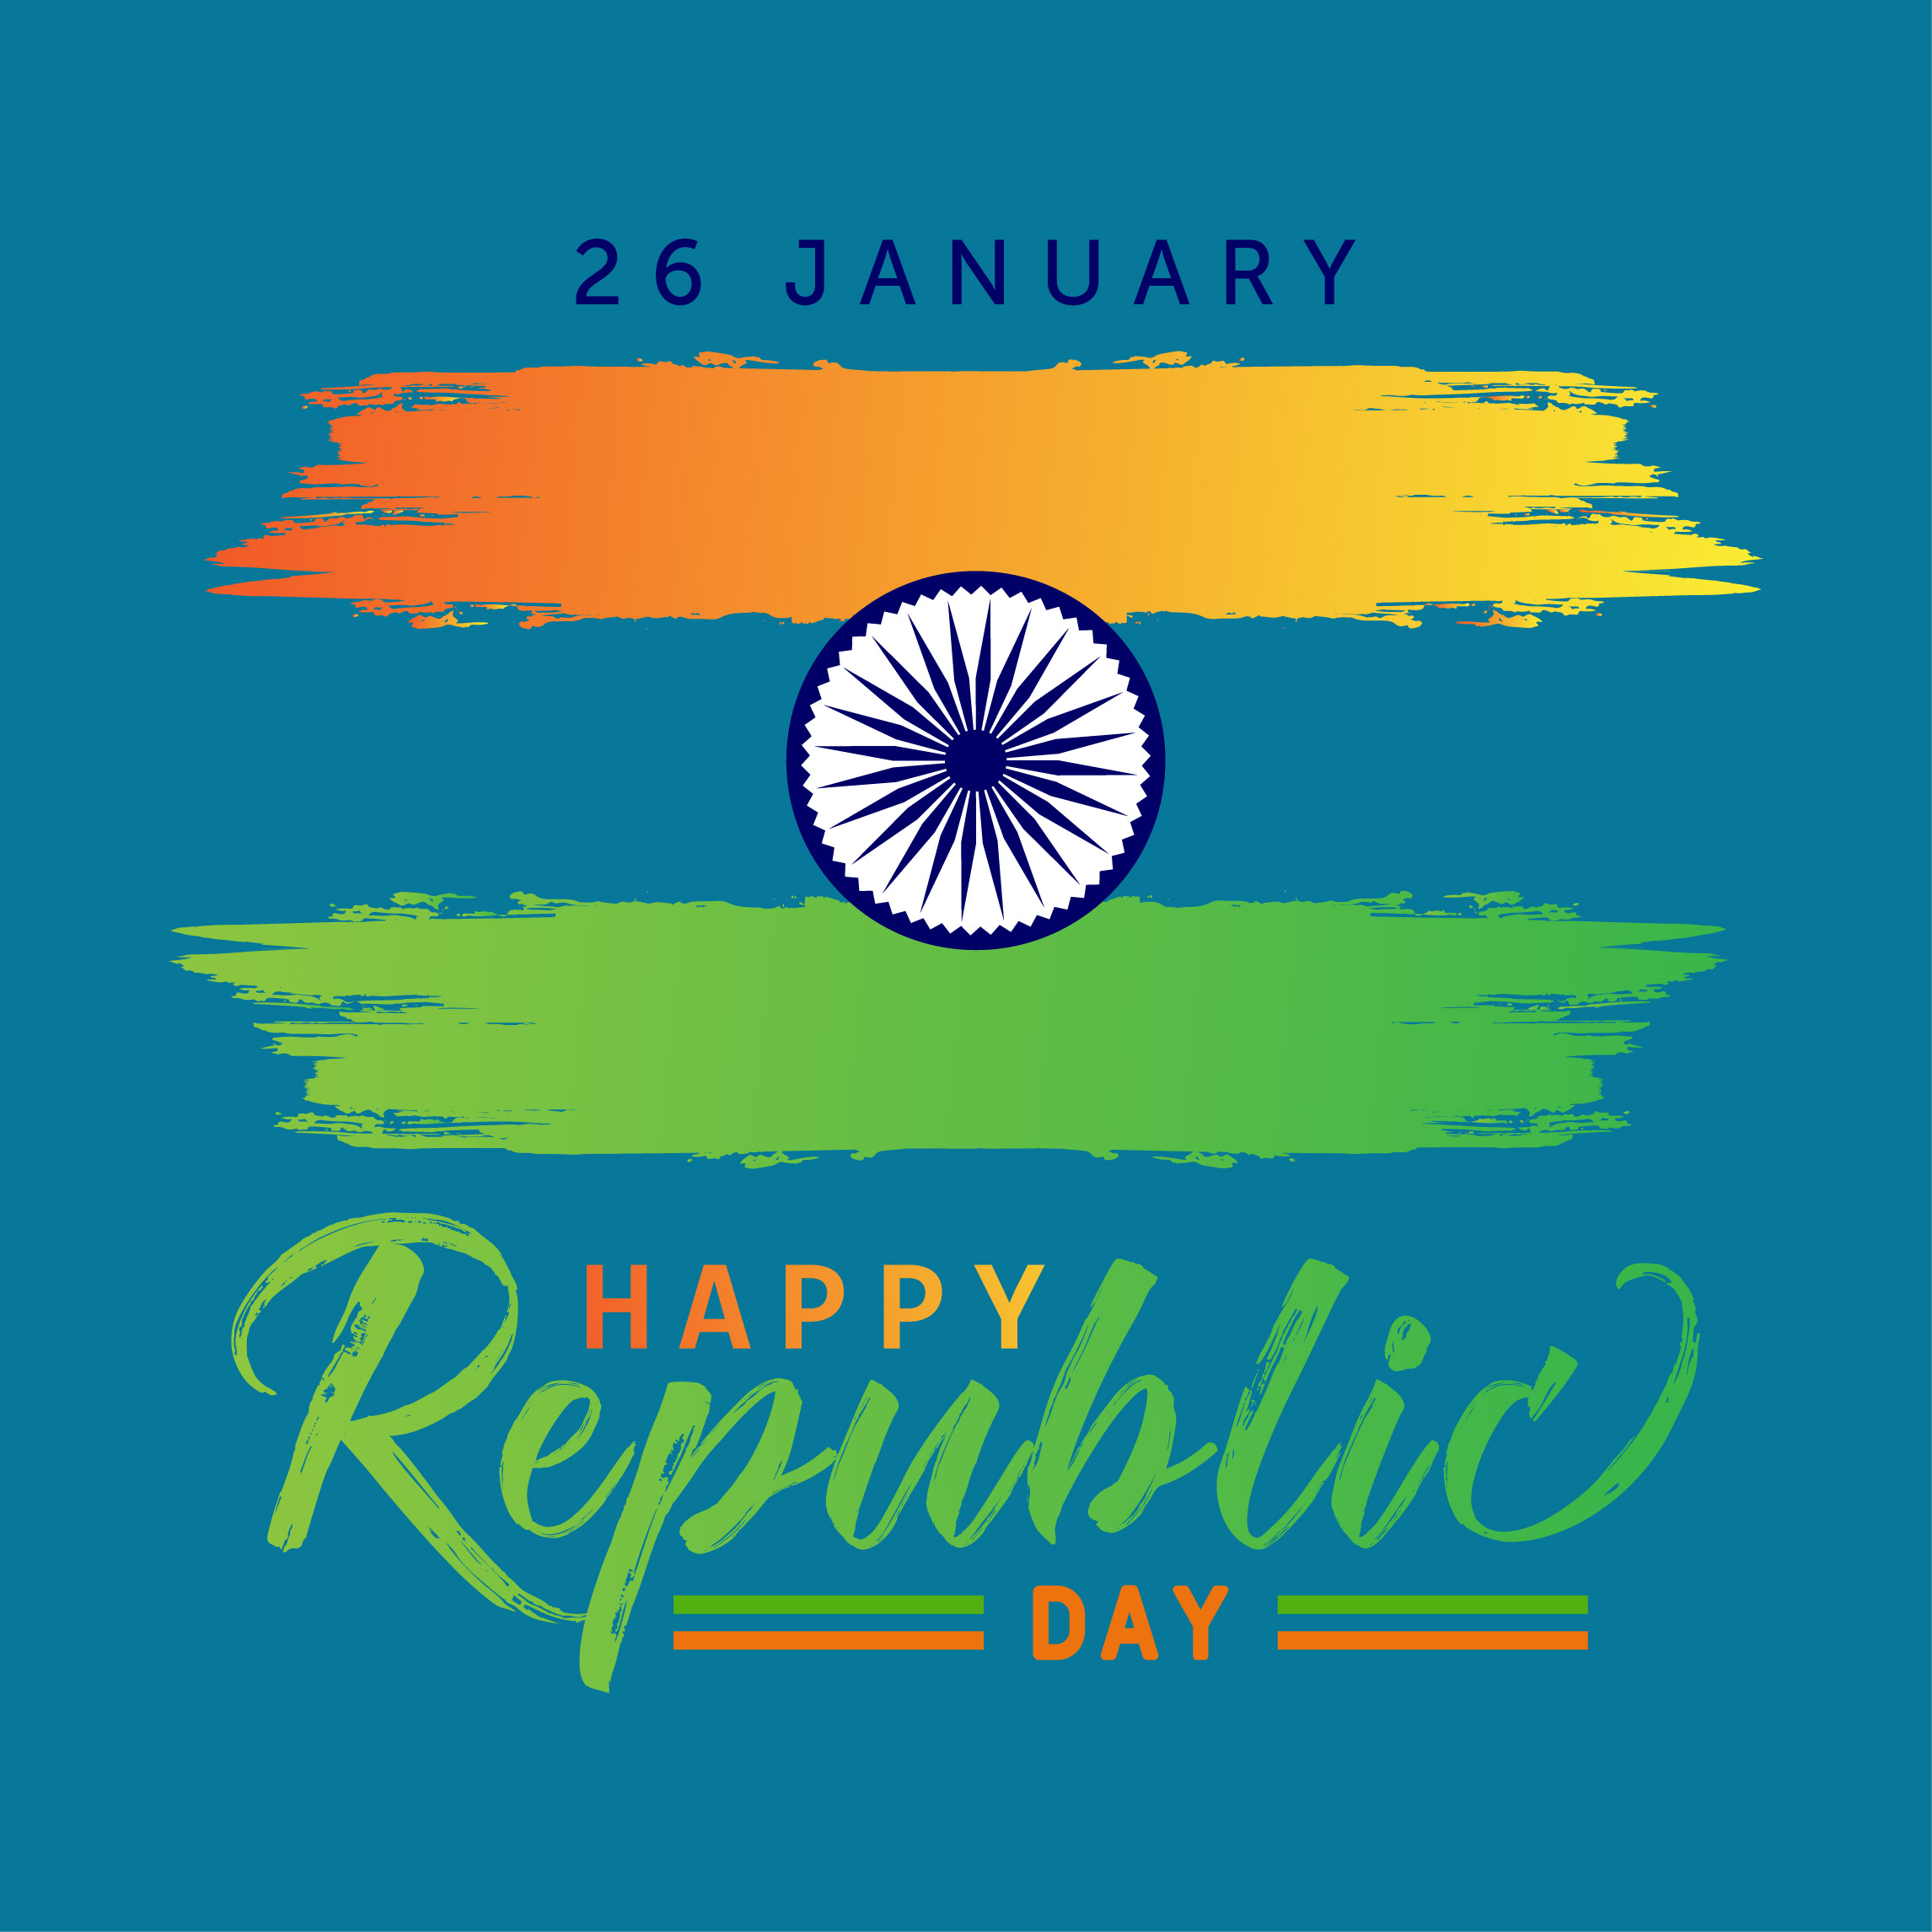 Happy Republic Day India Template Design cover image.